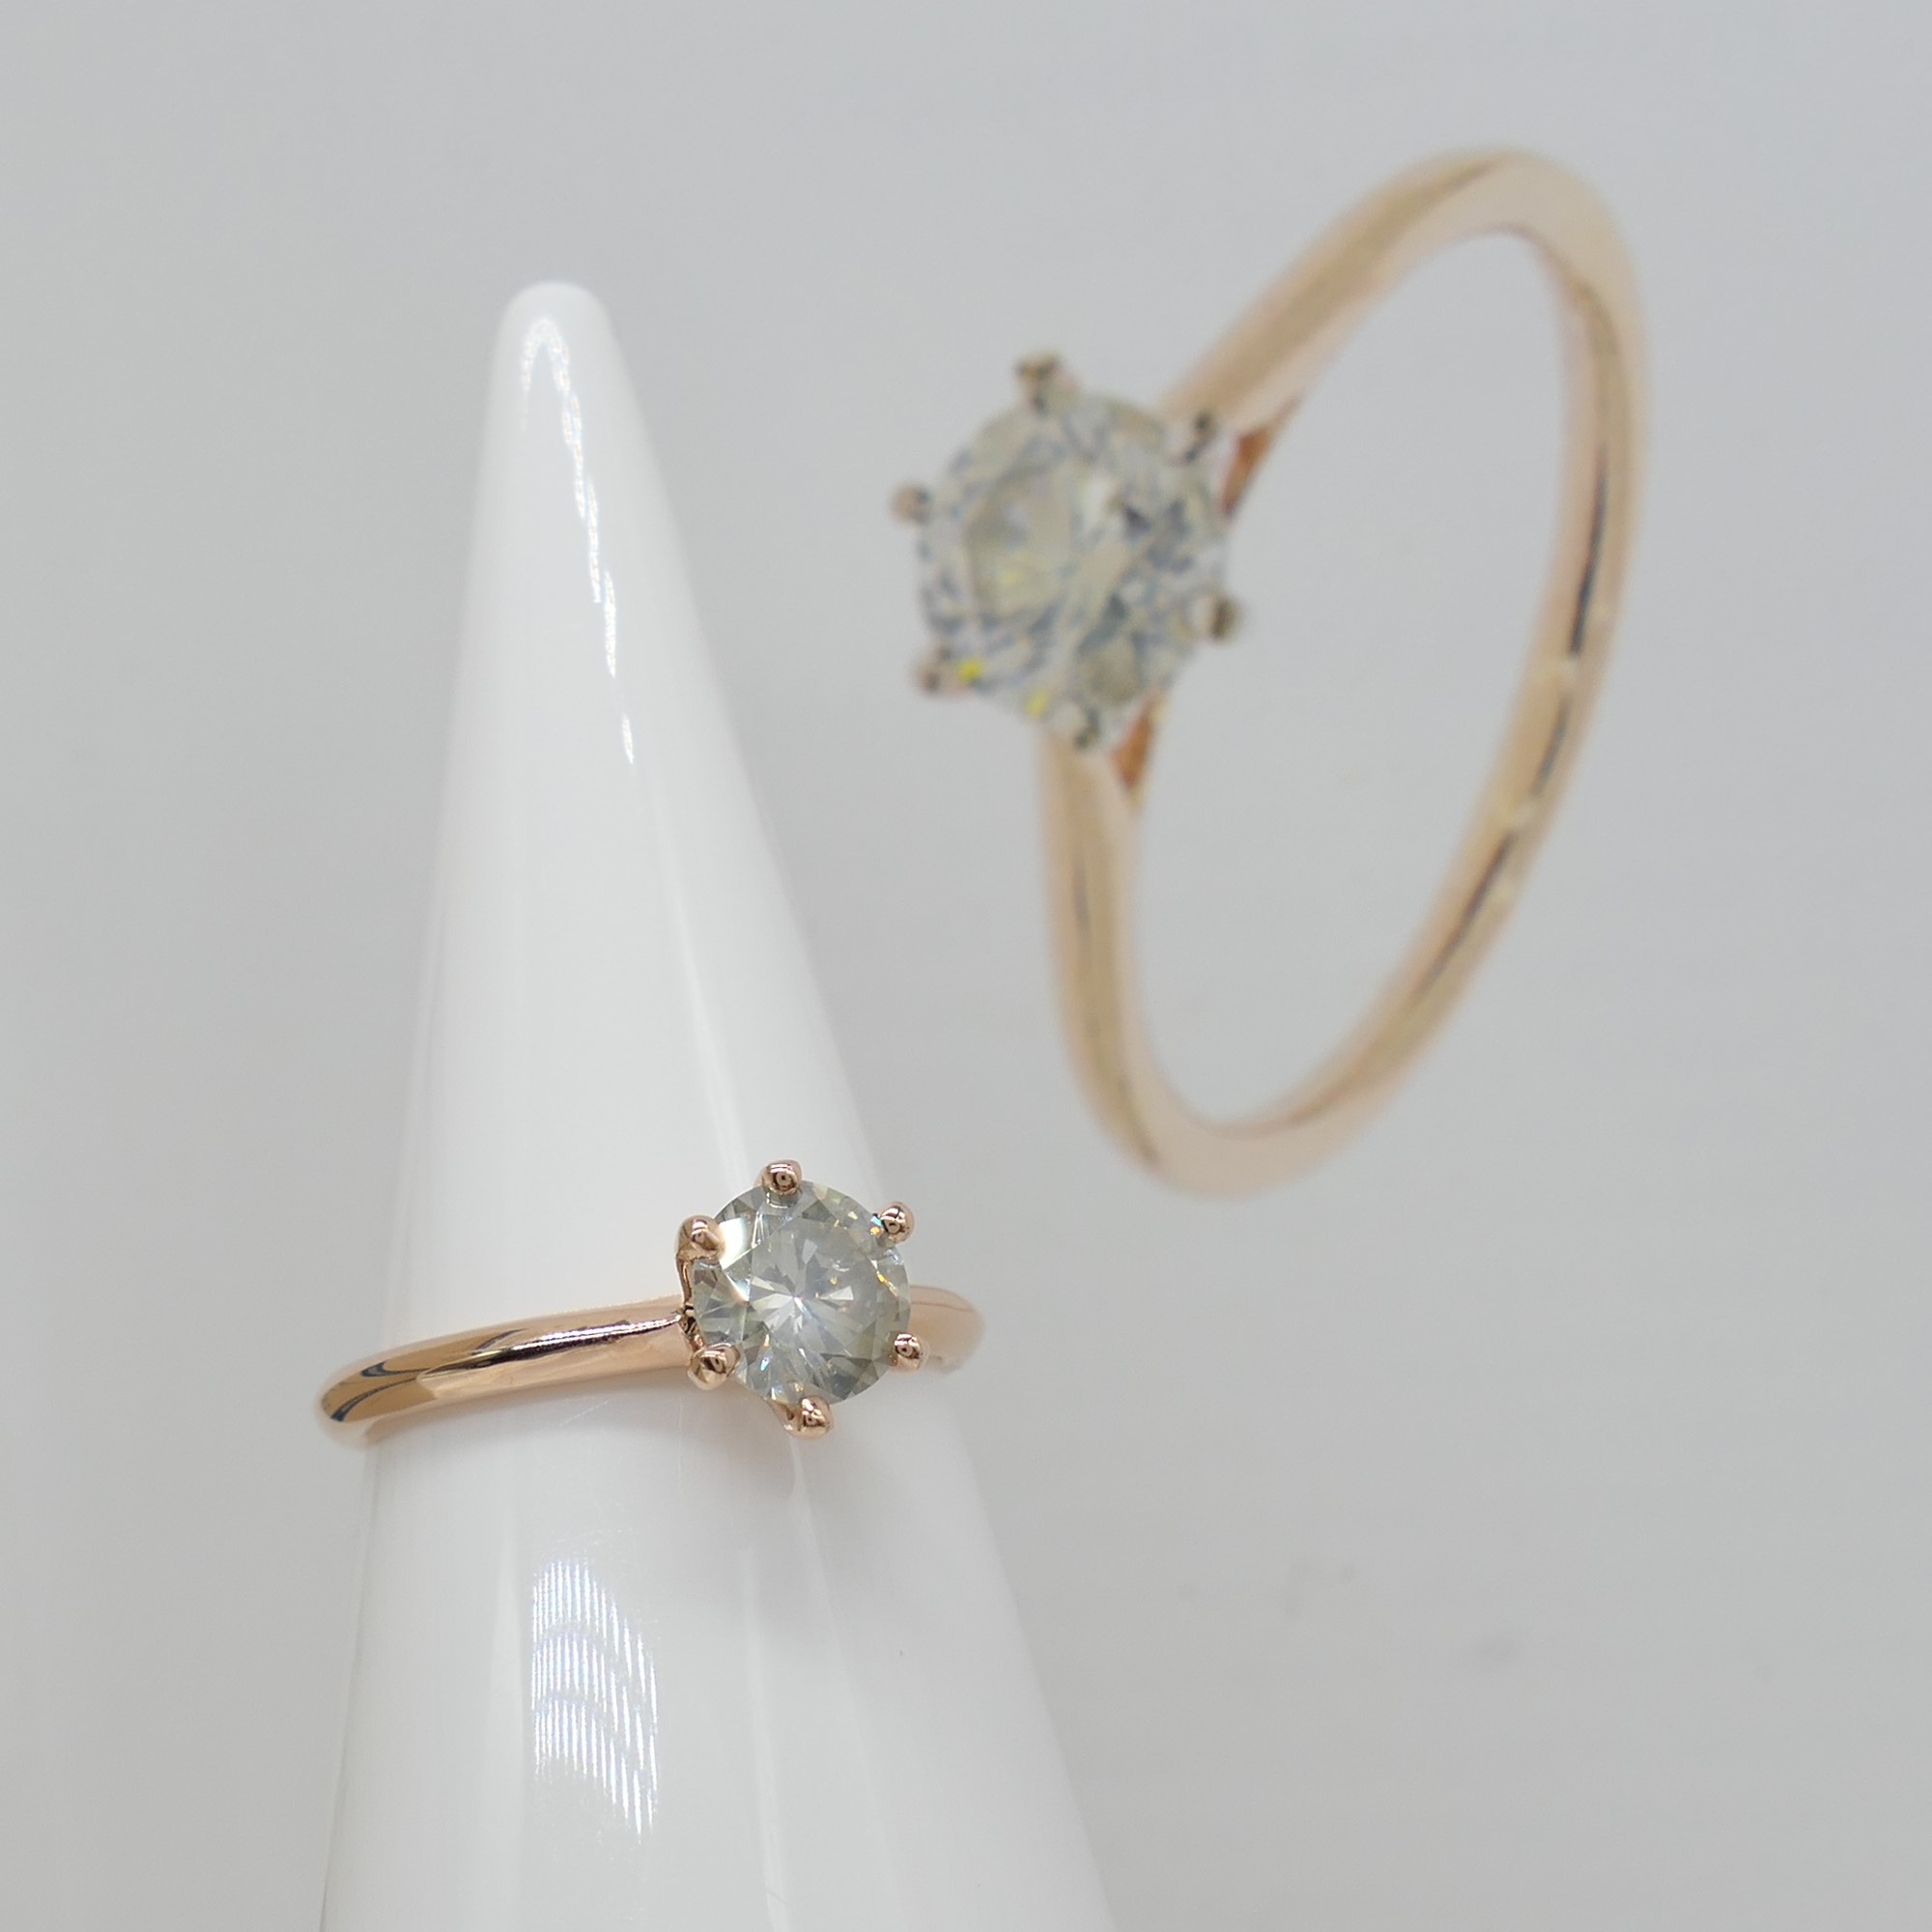 0.81 Carat Round Brilliant-Cut Diamond Solitaire Ring In 18K Rose Gold - Image 2 of 8